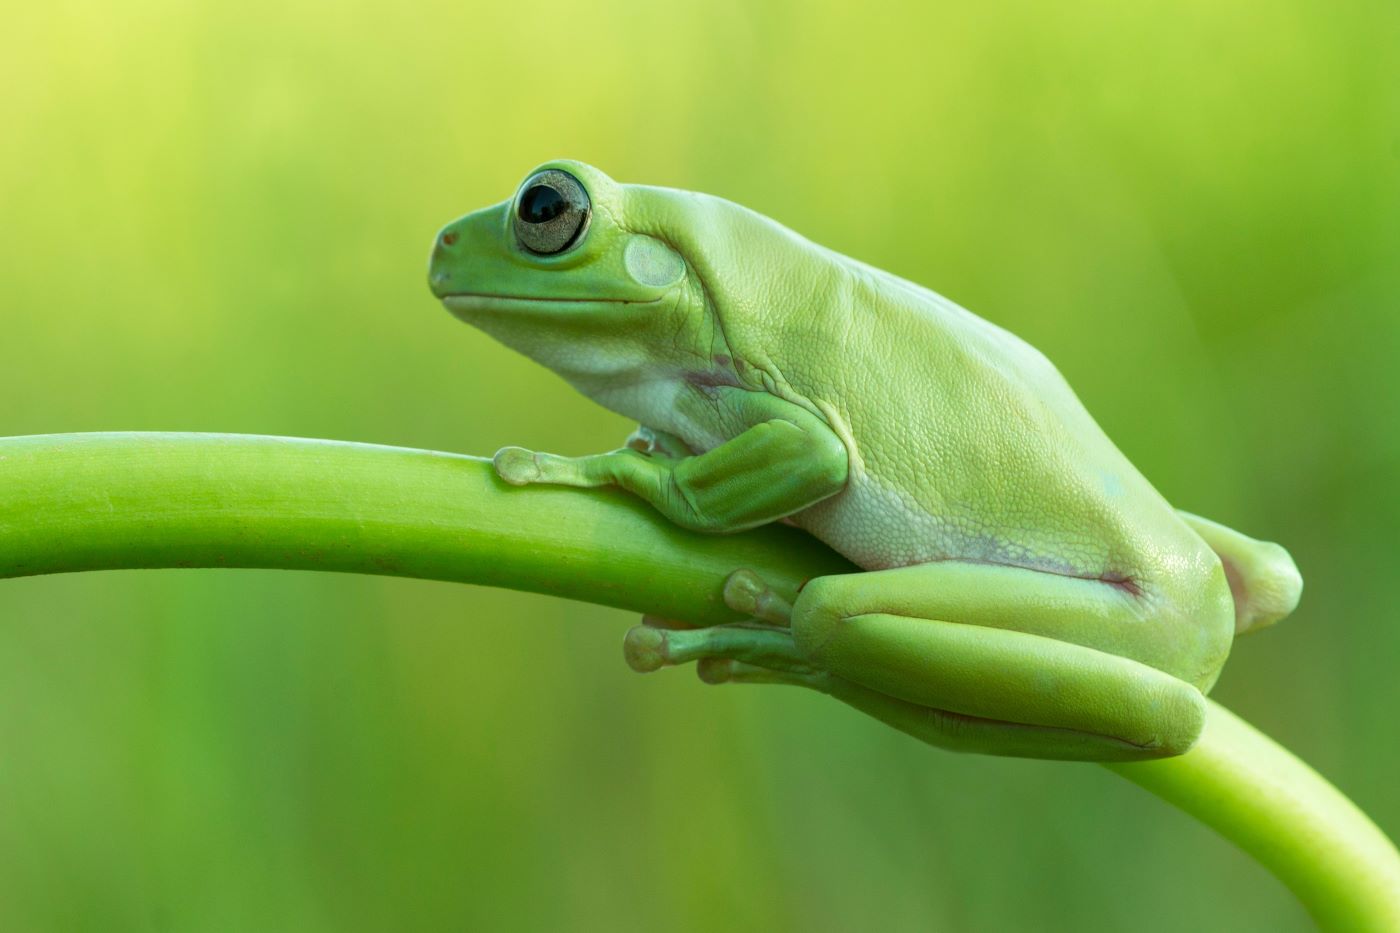 dumpy frog litoria caerulea on green leaves, dumpy frog on branch, tree frog on branch, amphibian closeup